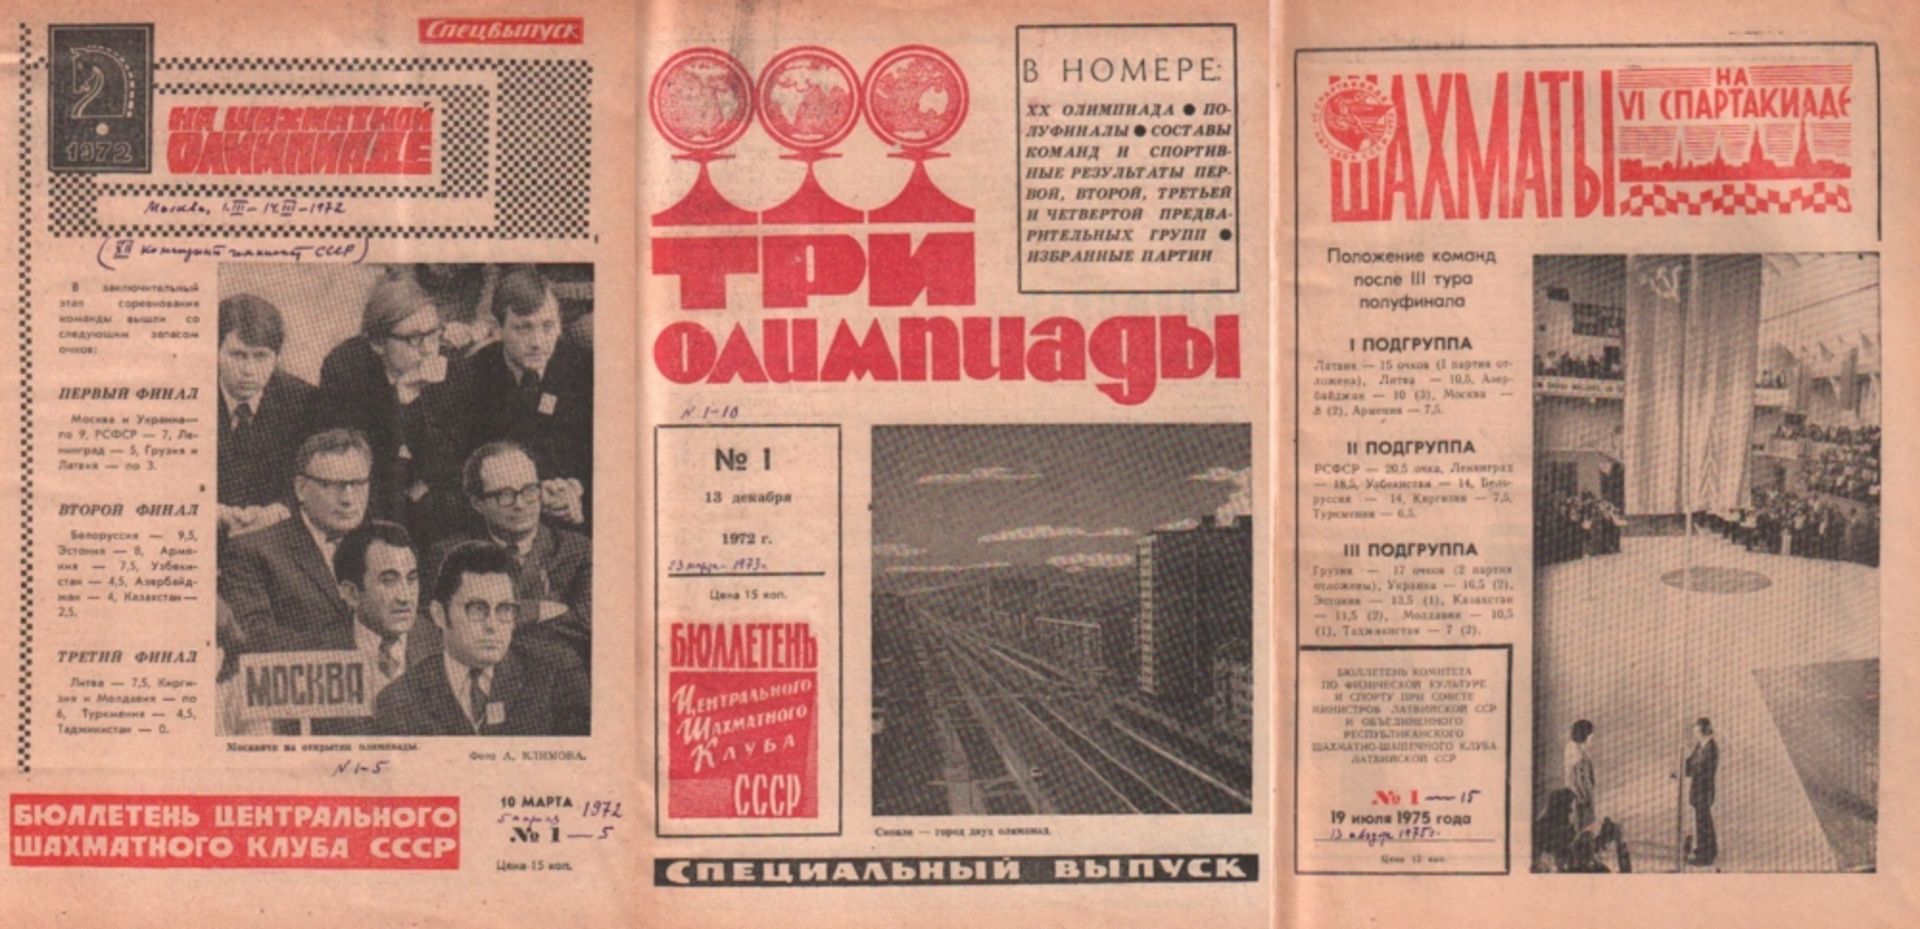 Skopje 1972. Tri olimpiady. Bulletin ZSK SSSR. Bulletin Nr. 1 - 10. Moskau, Moskowskaja Prawda, 1972